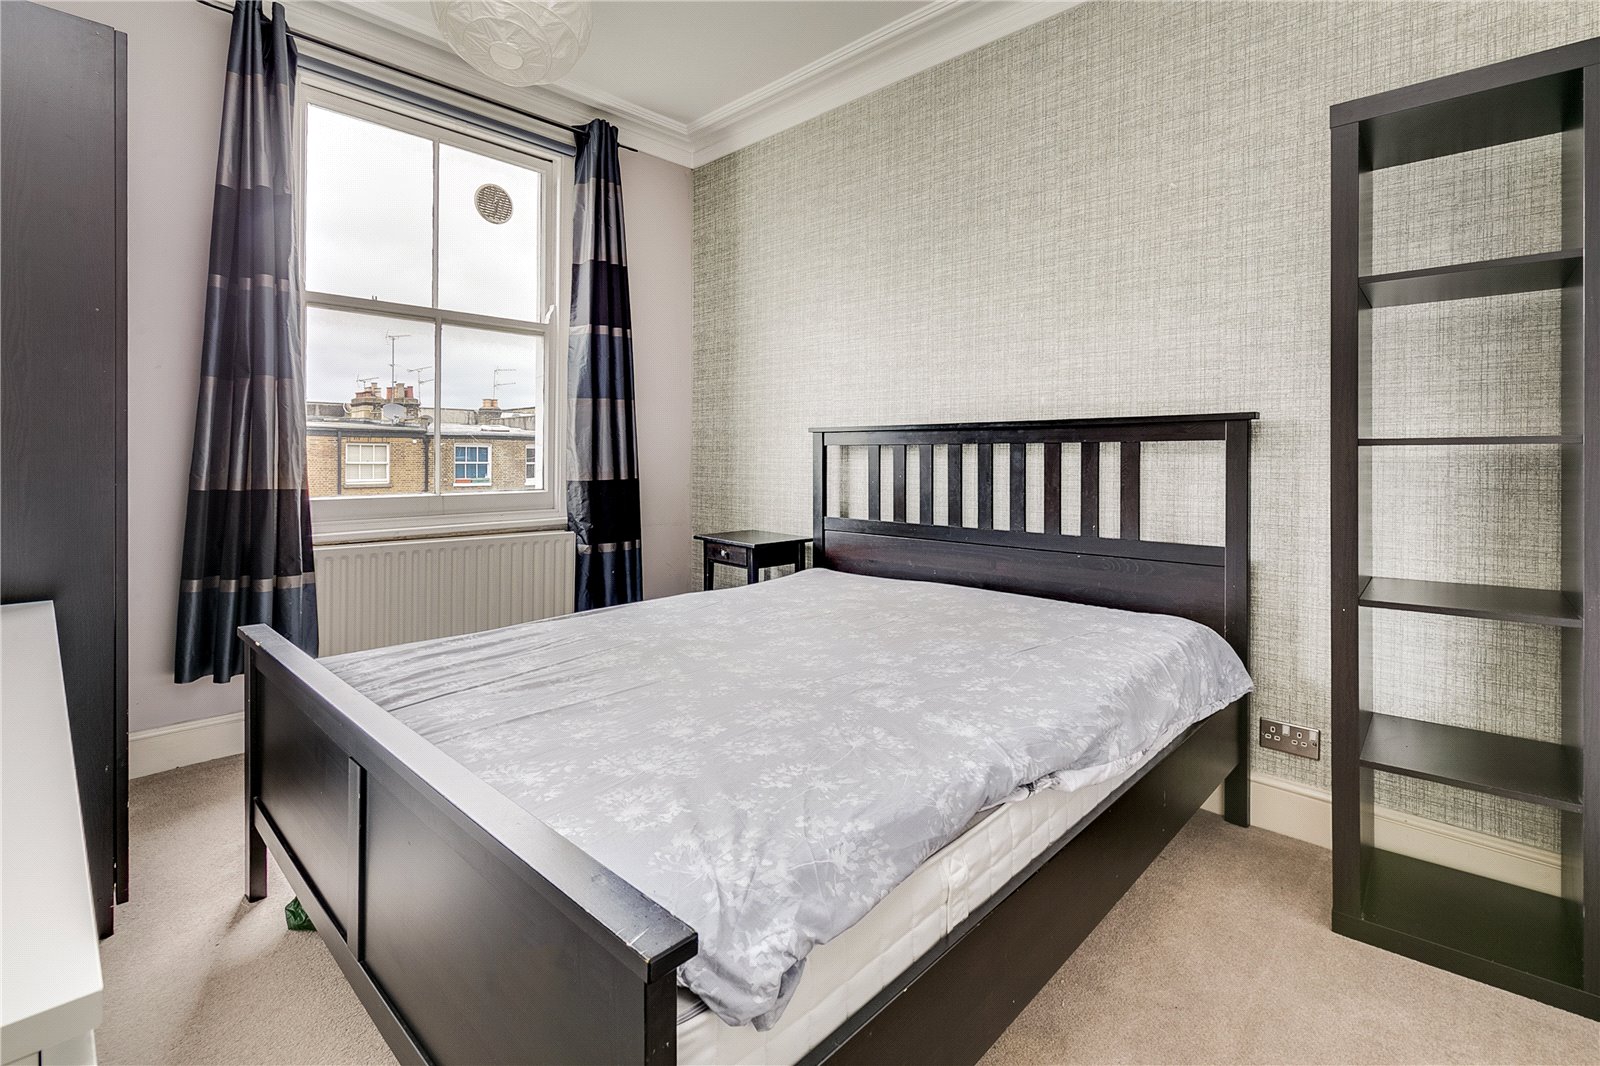 Earls Court,United Kingdom,2 Bedrooms Bedrooms,1 BathroomBathrooms,Flat / Apartment,1087